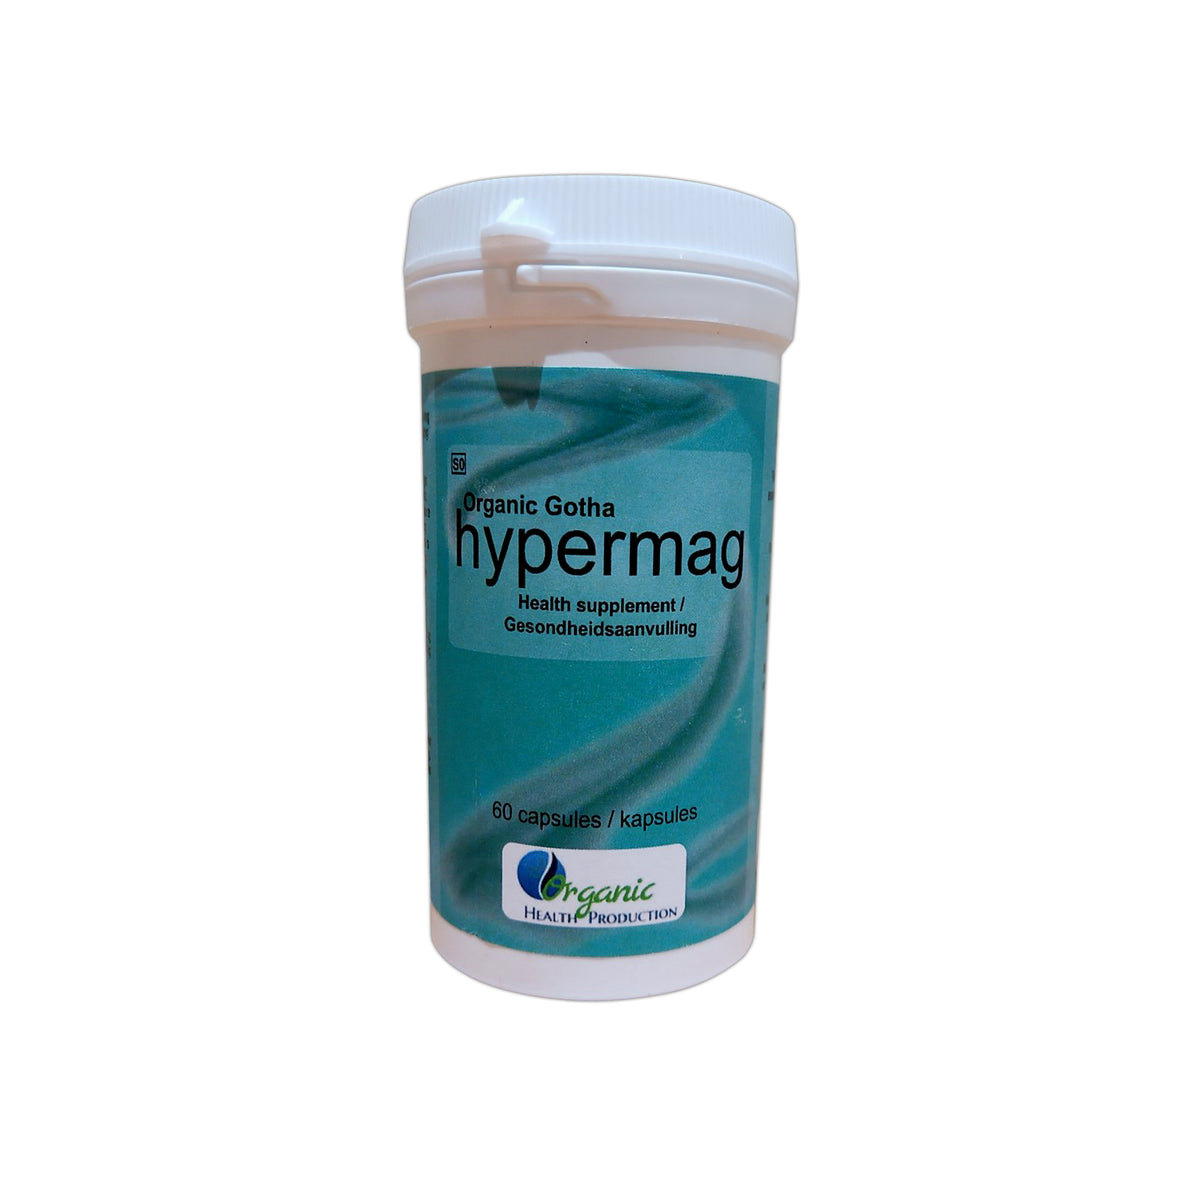 Organic Gotha Hypermag Magnesium Capsules - for Energy and Wellness